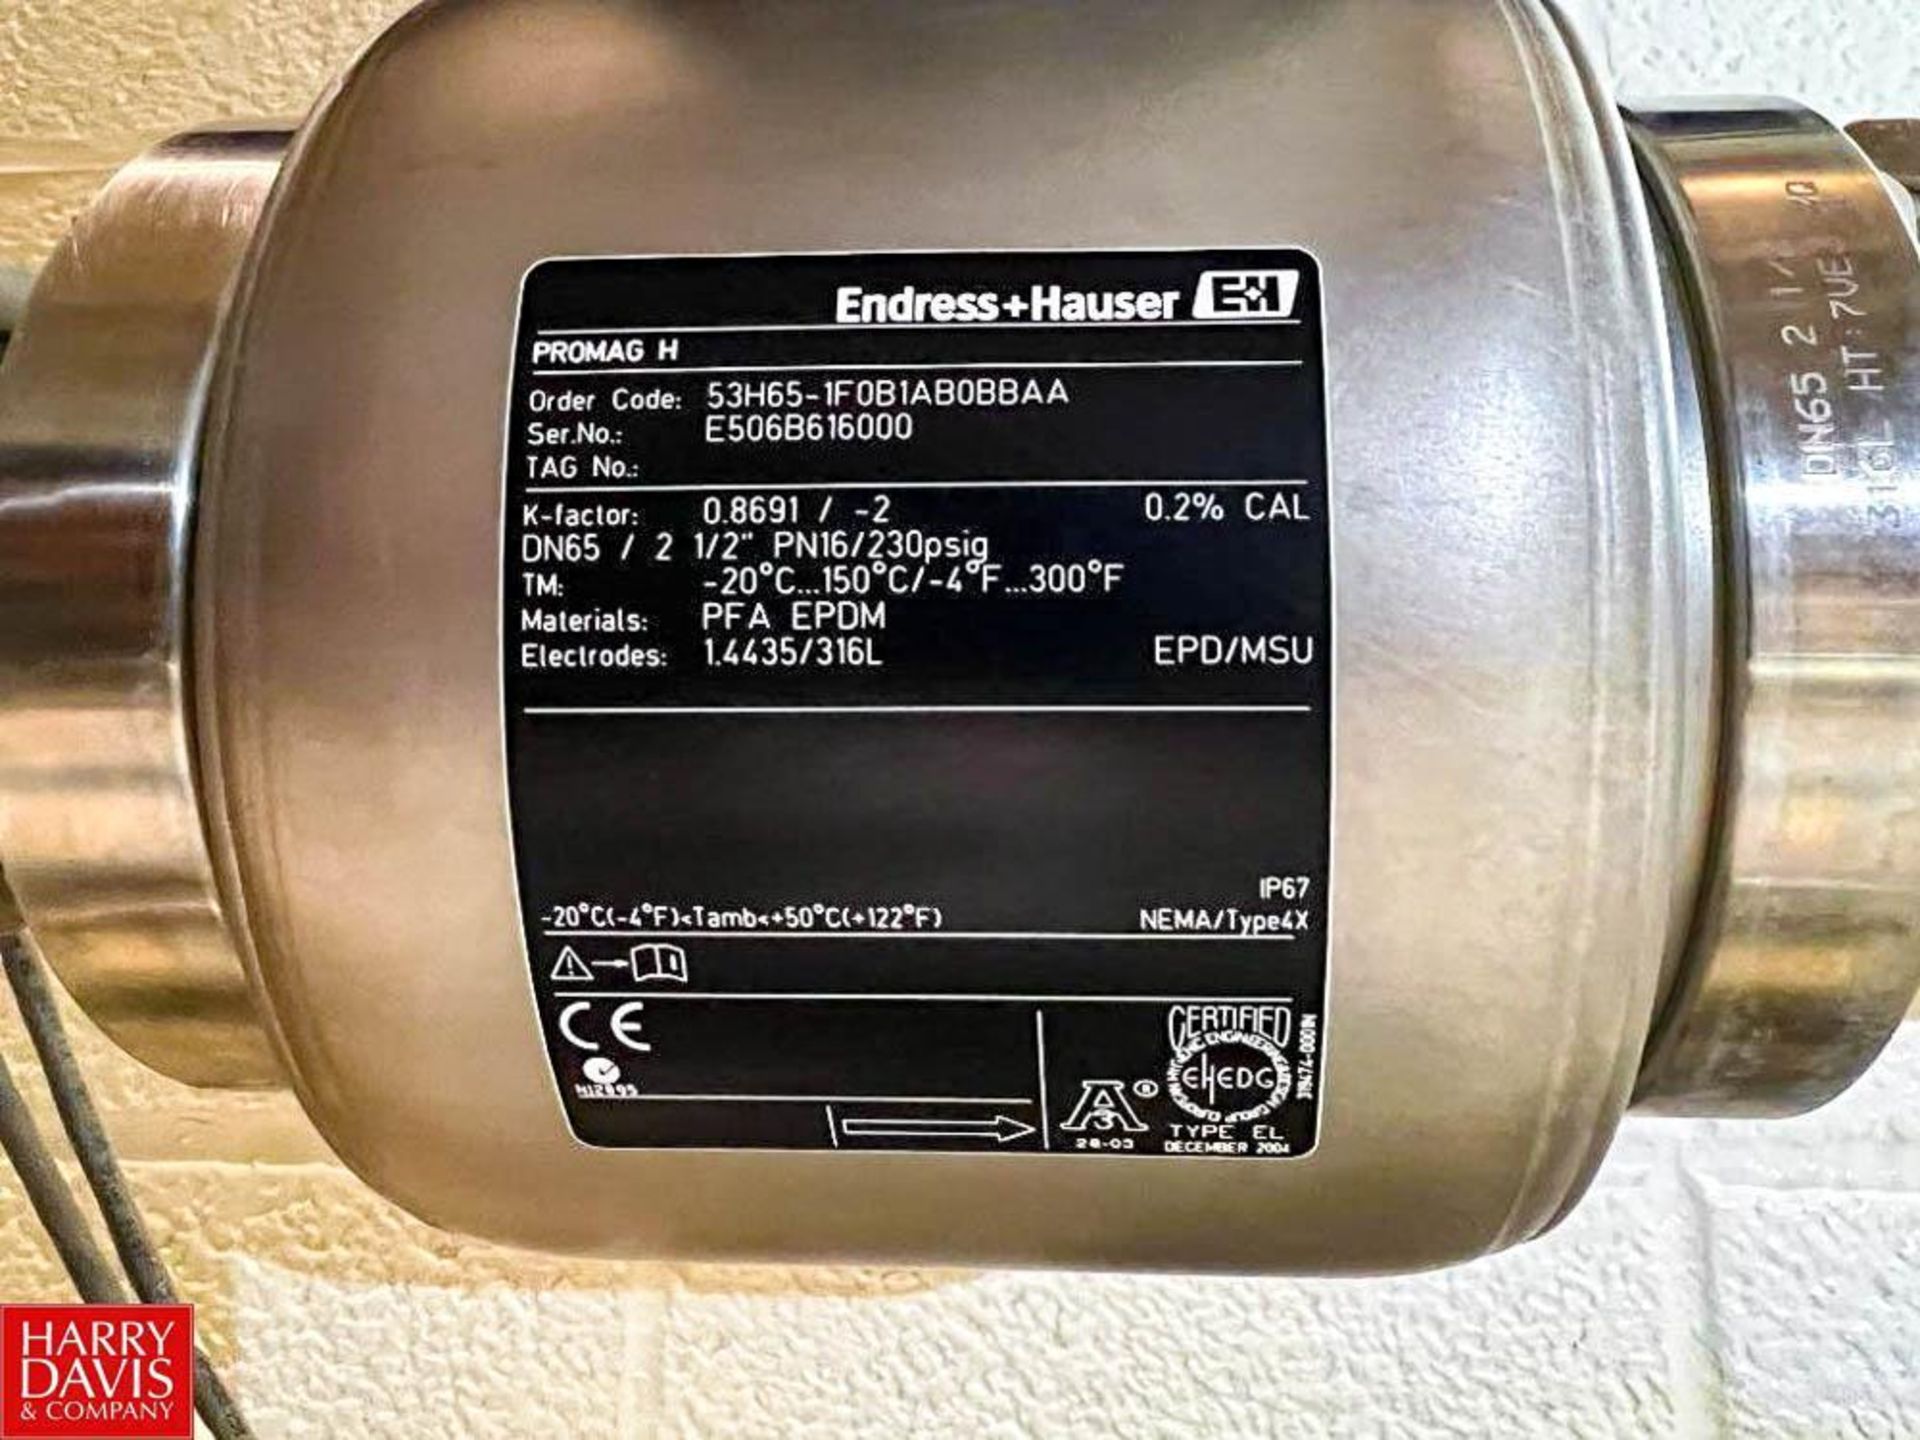 Endress+Hauser ProMag H S/S Flow Meter, Order Code: 53H65-1F0B1AB0BBAA, S/N: E506B616000 - Image 2 of 2